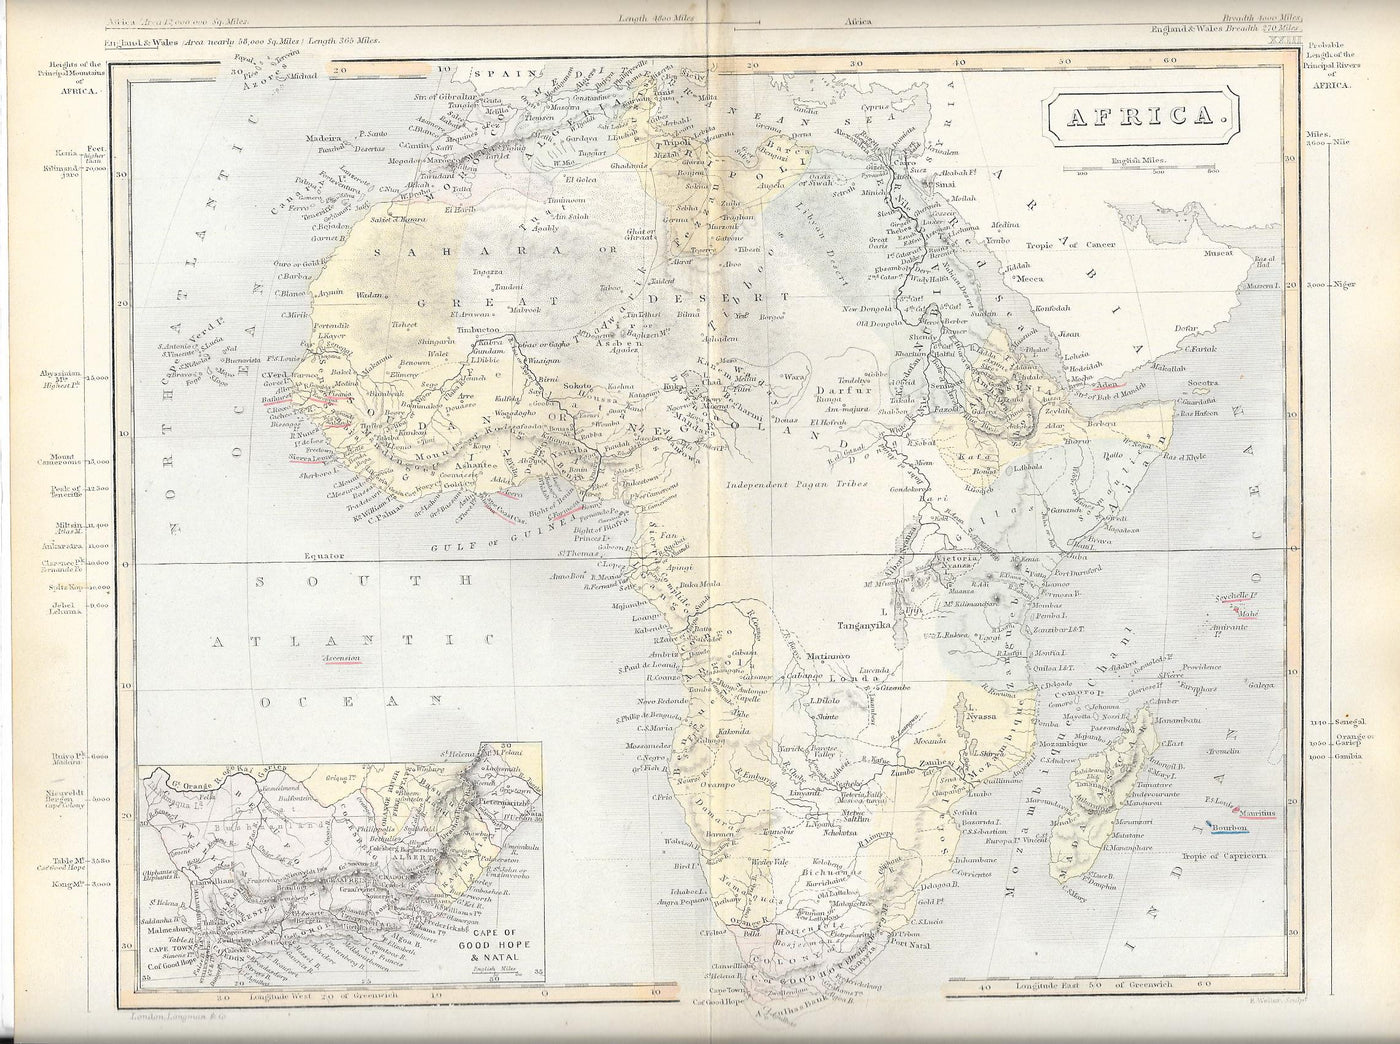 Africa guaranteed original antique map published 1871